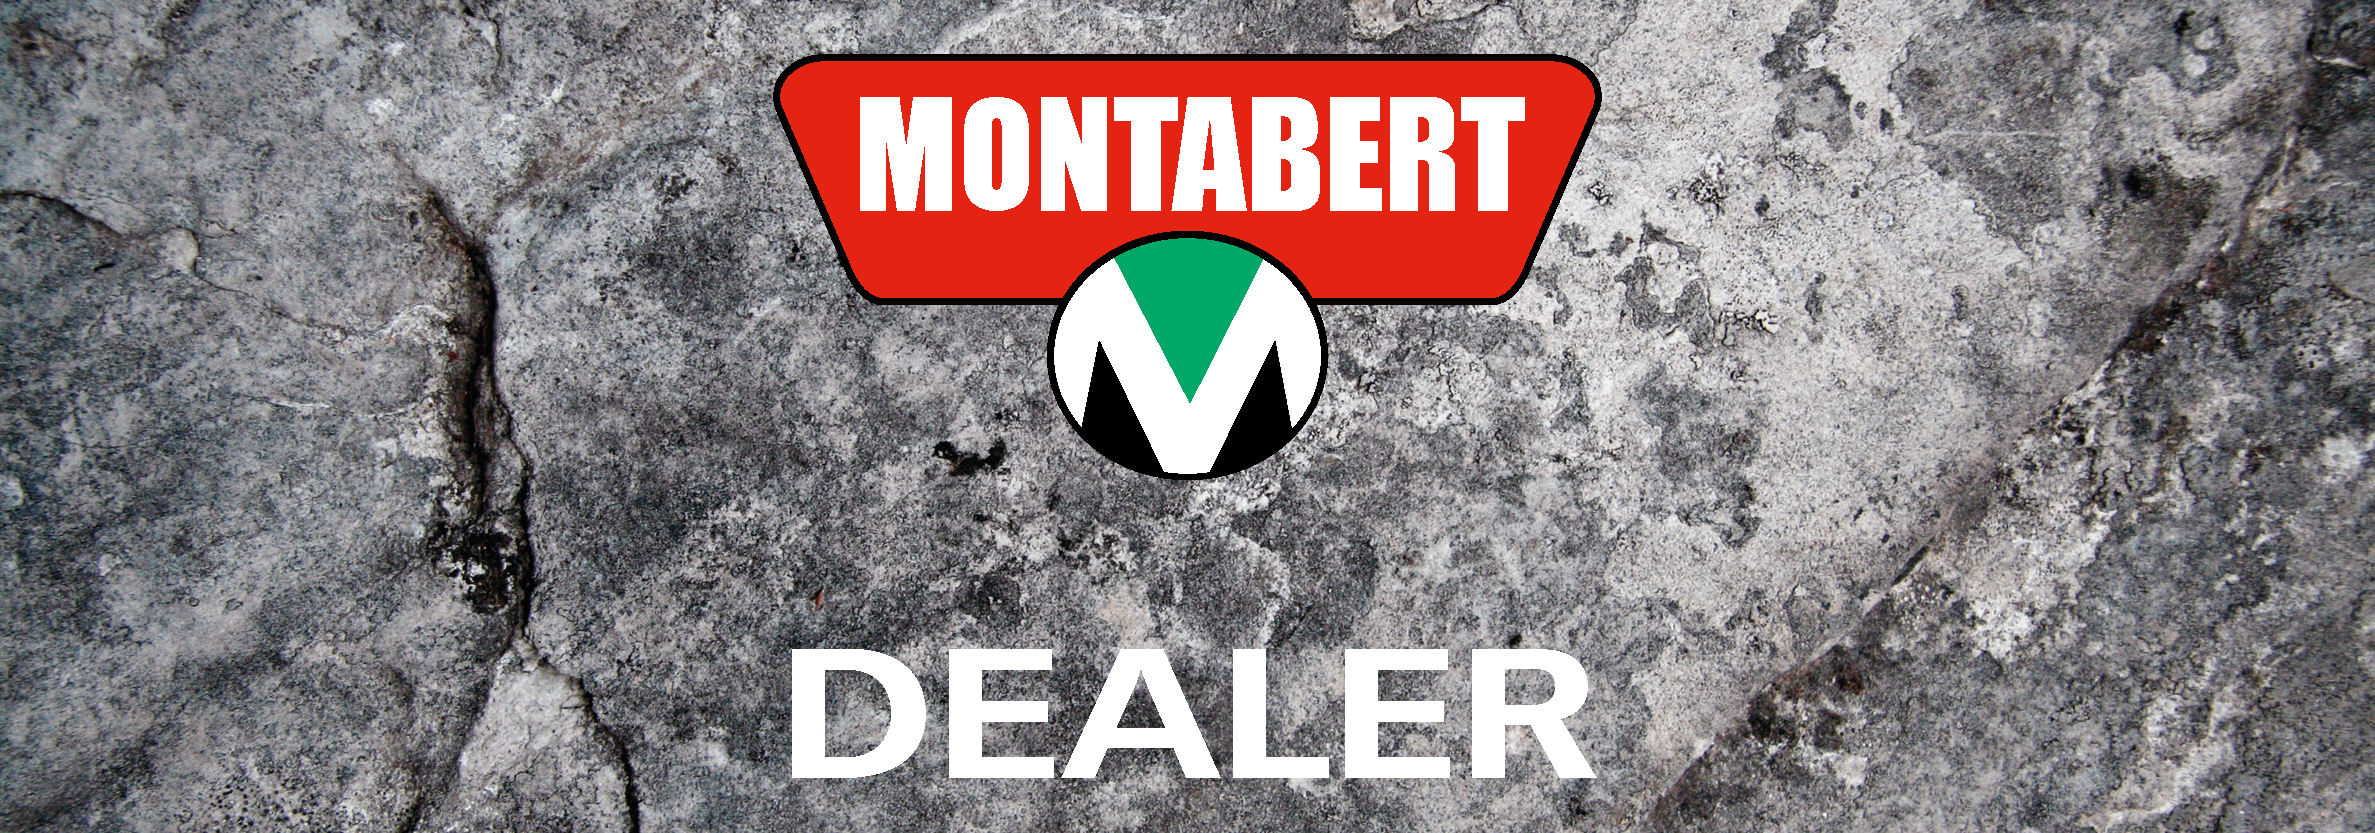 montabet dealer1